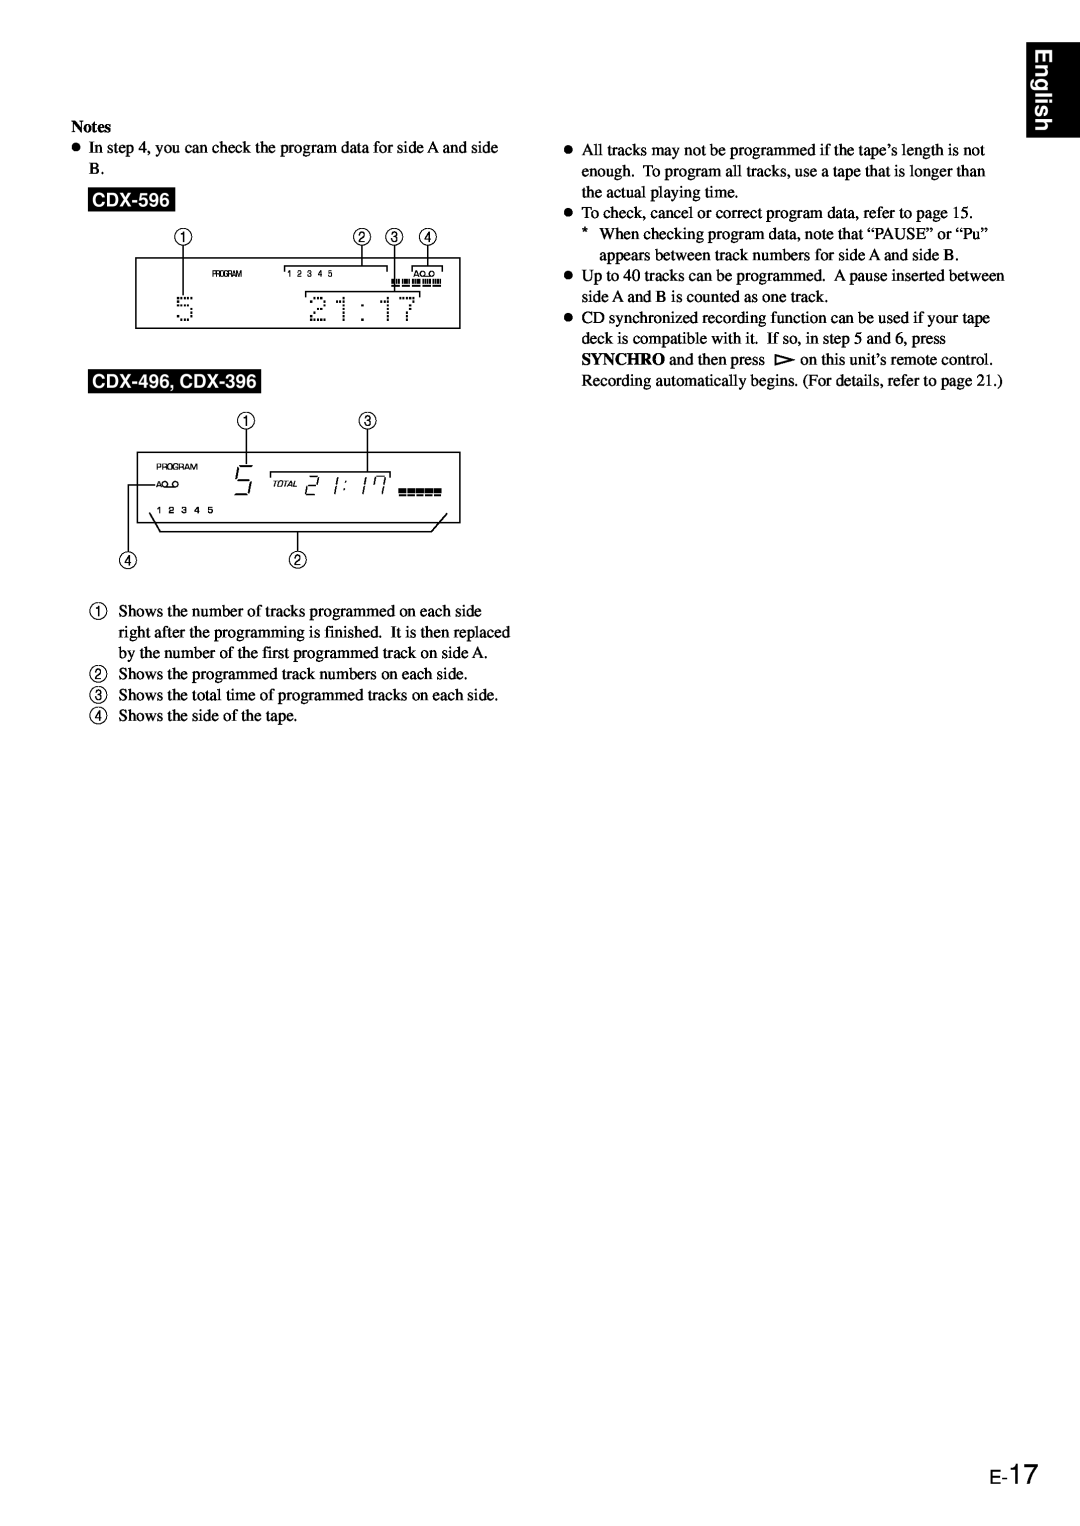 Yamaha owner manual English, CDX-596, CDX-496, CDX-396 